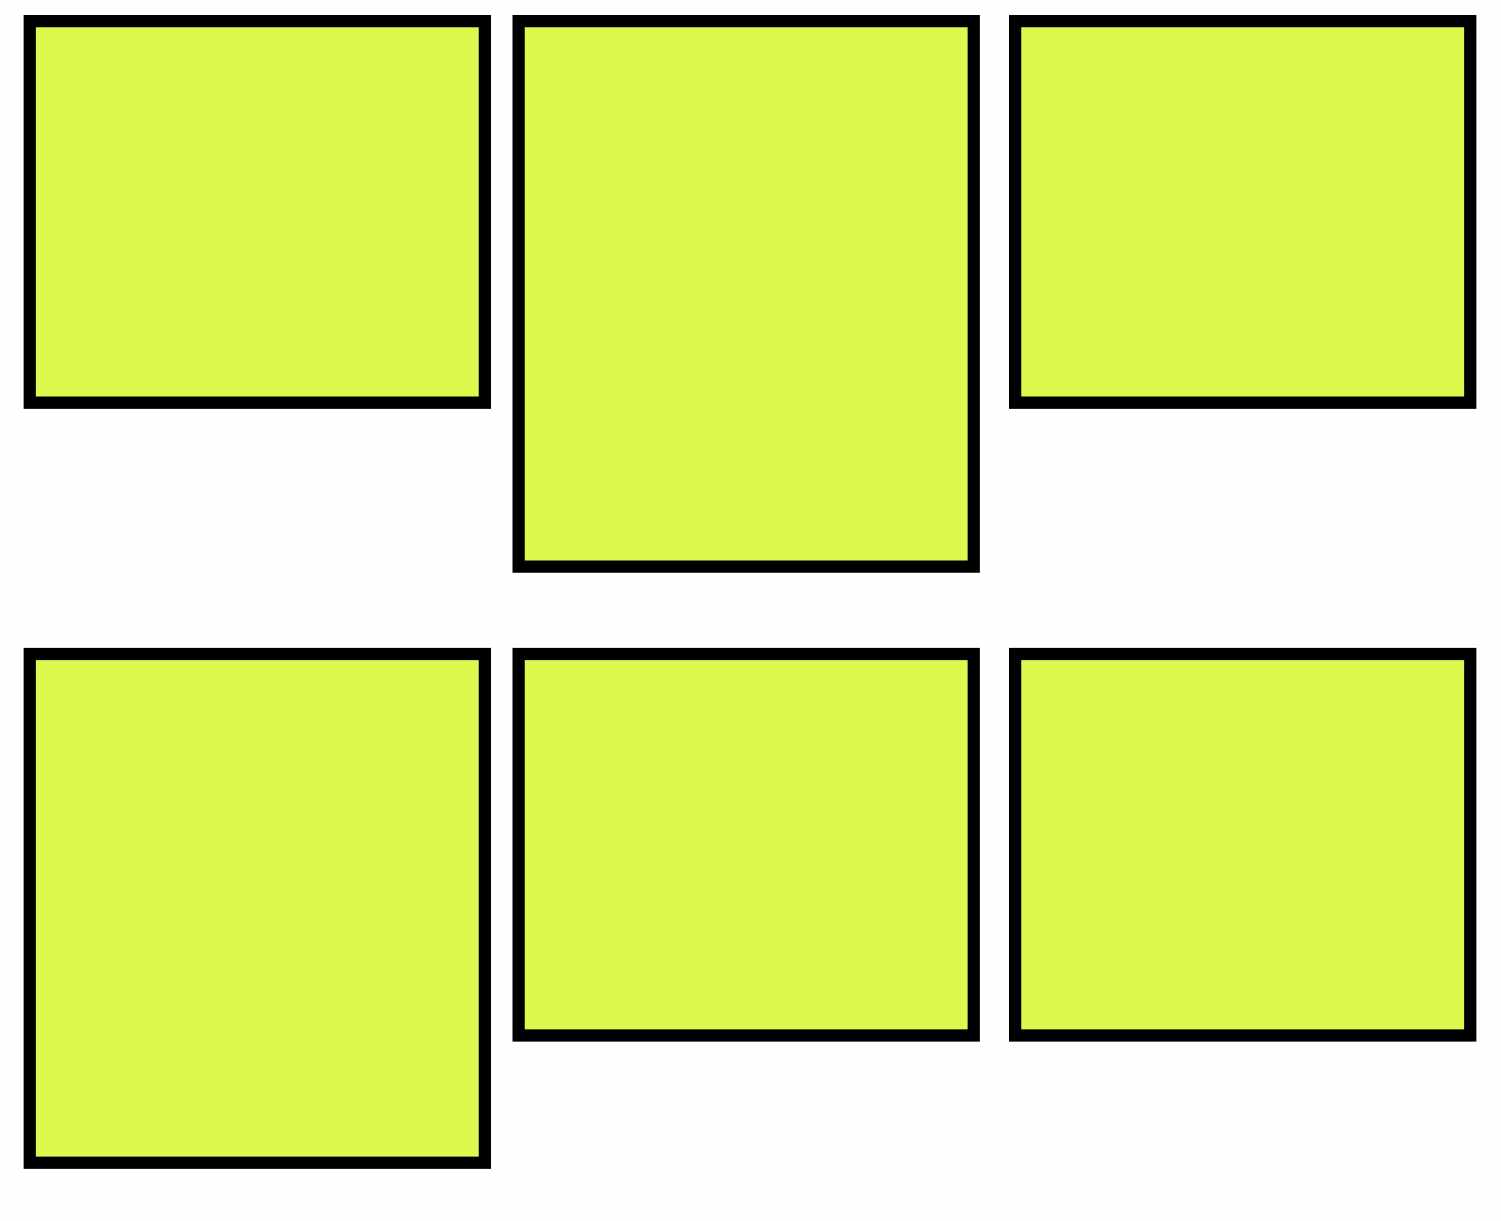 Standard grid layout